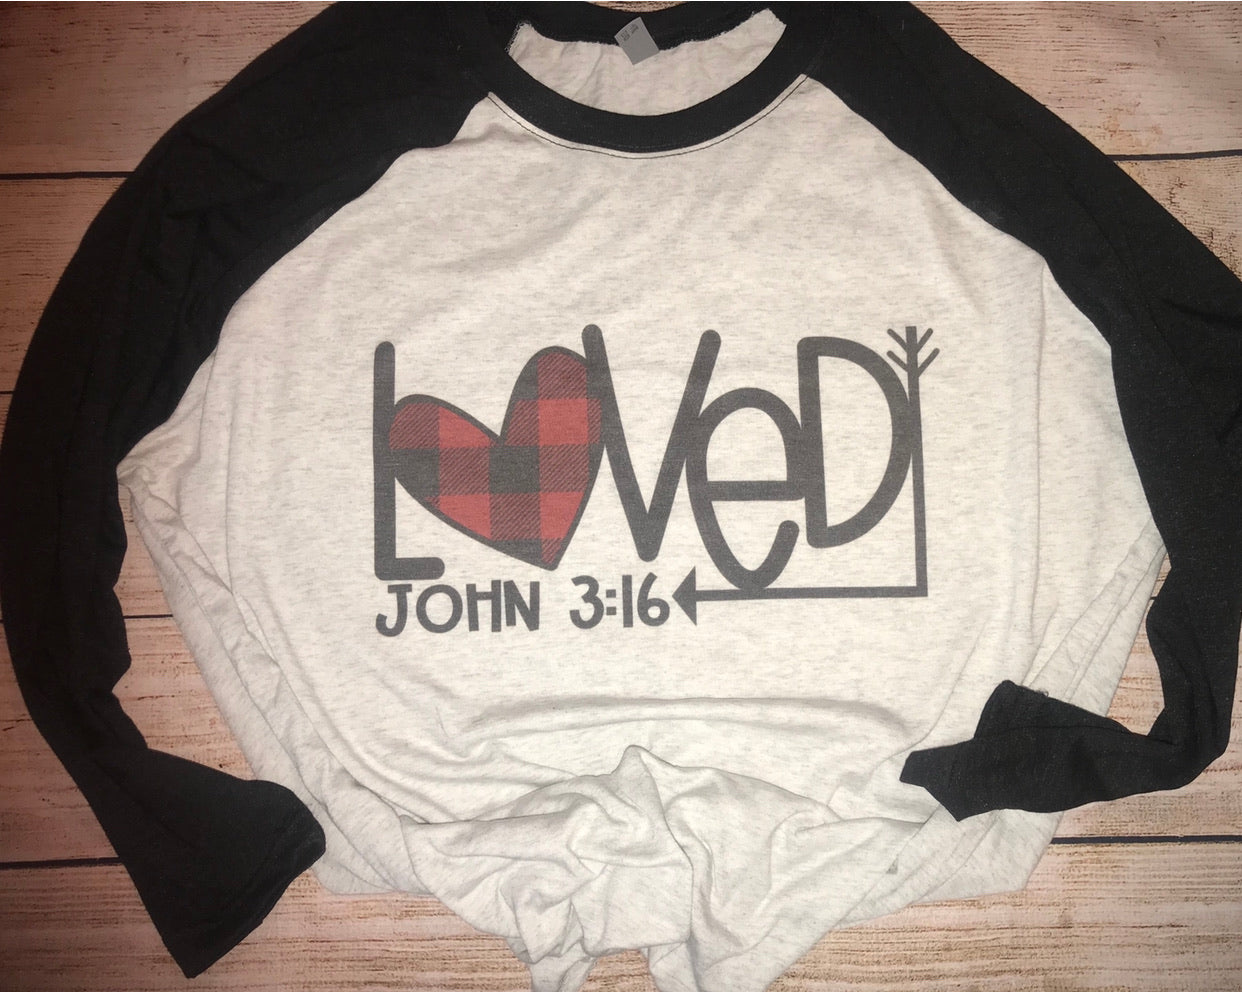 Loved  John 3:16 raglan T-shirt